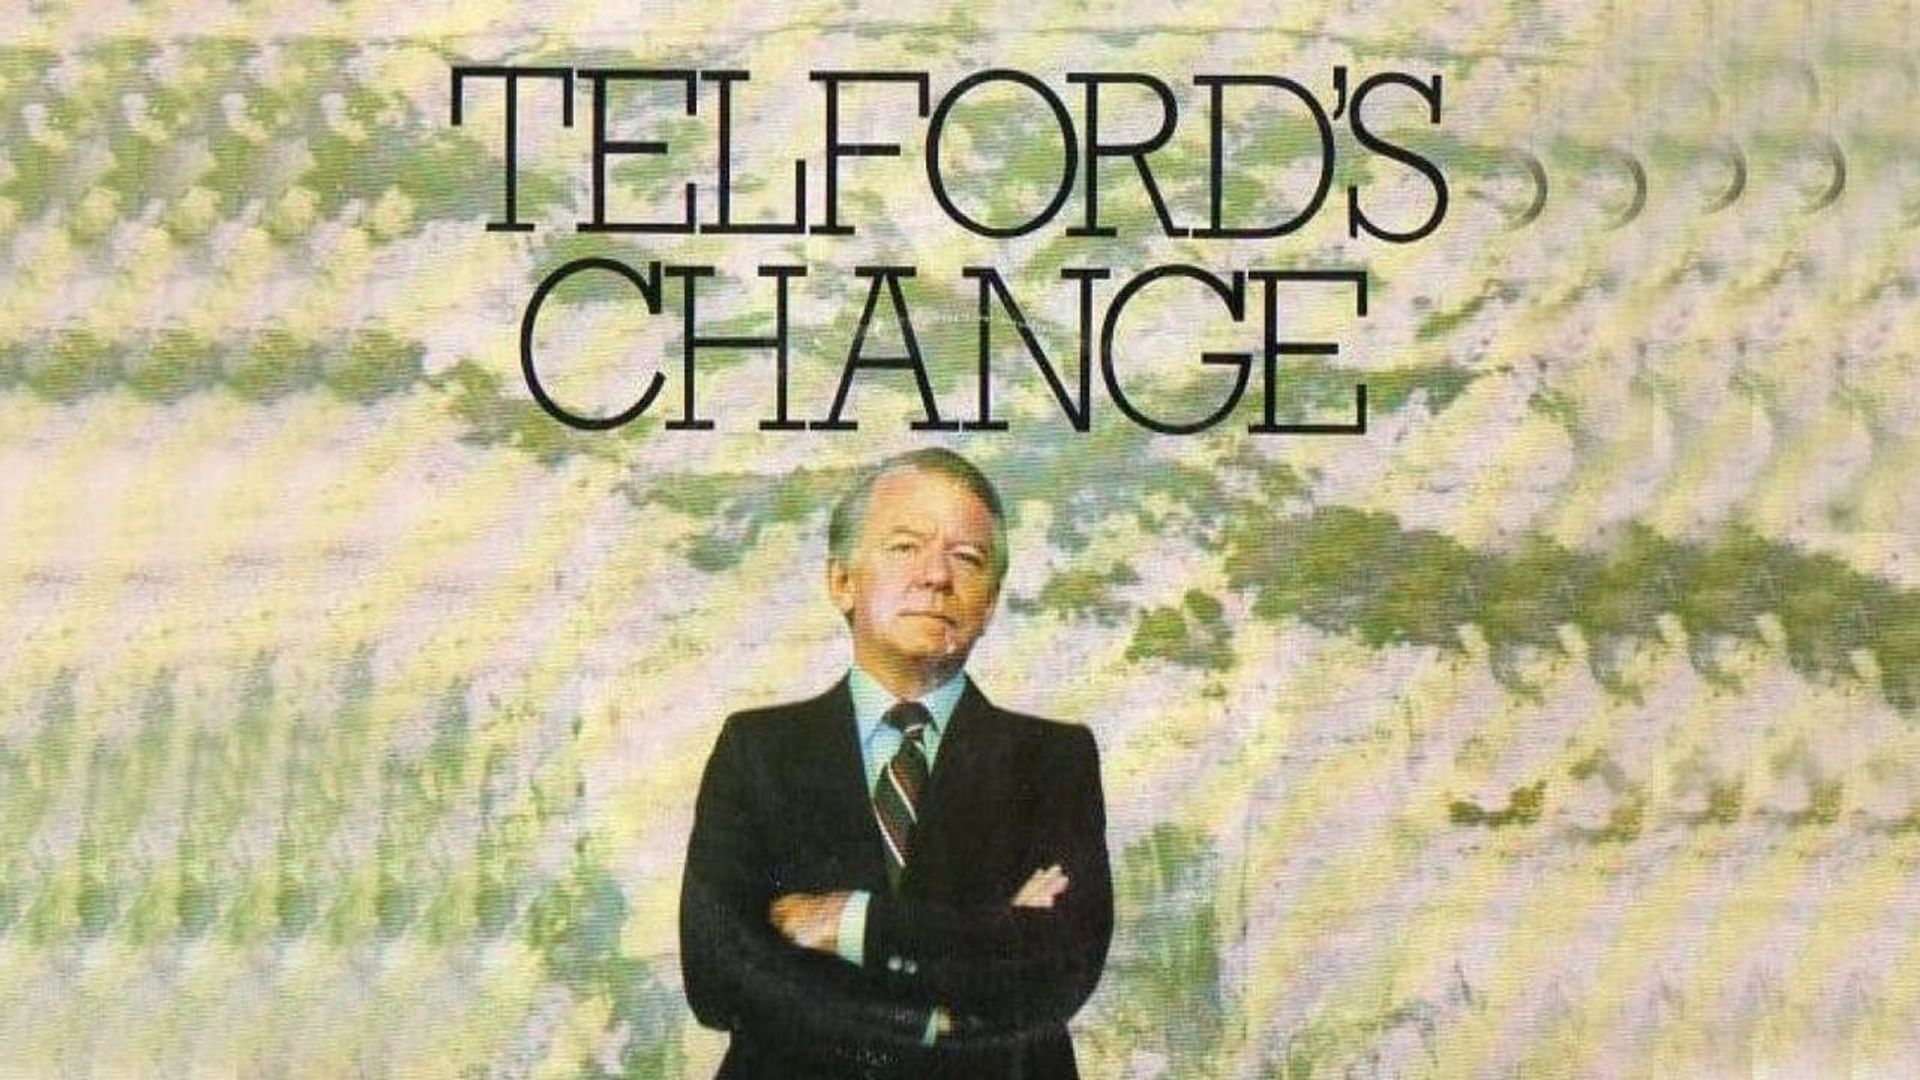 Telford's Change background